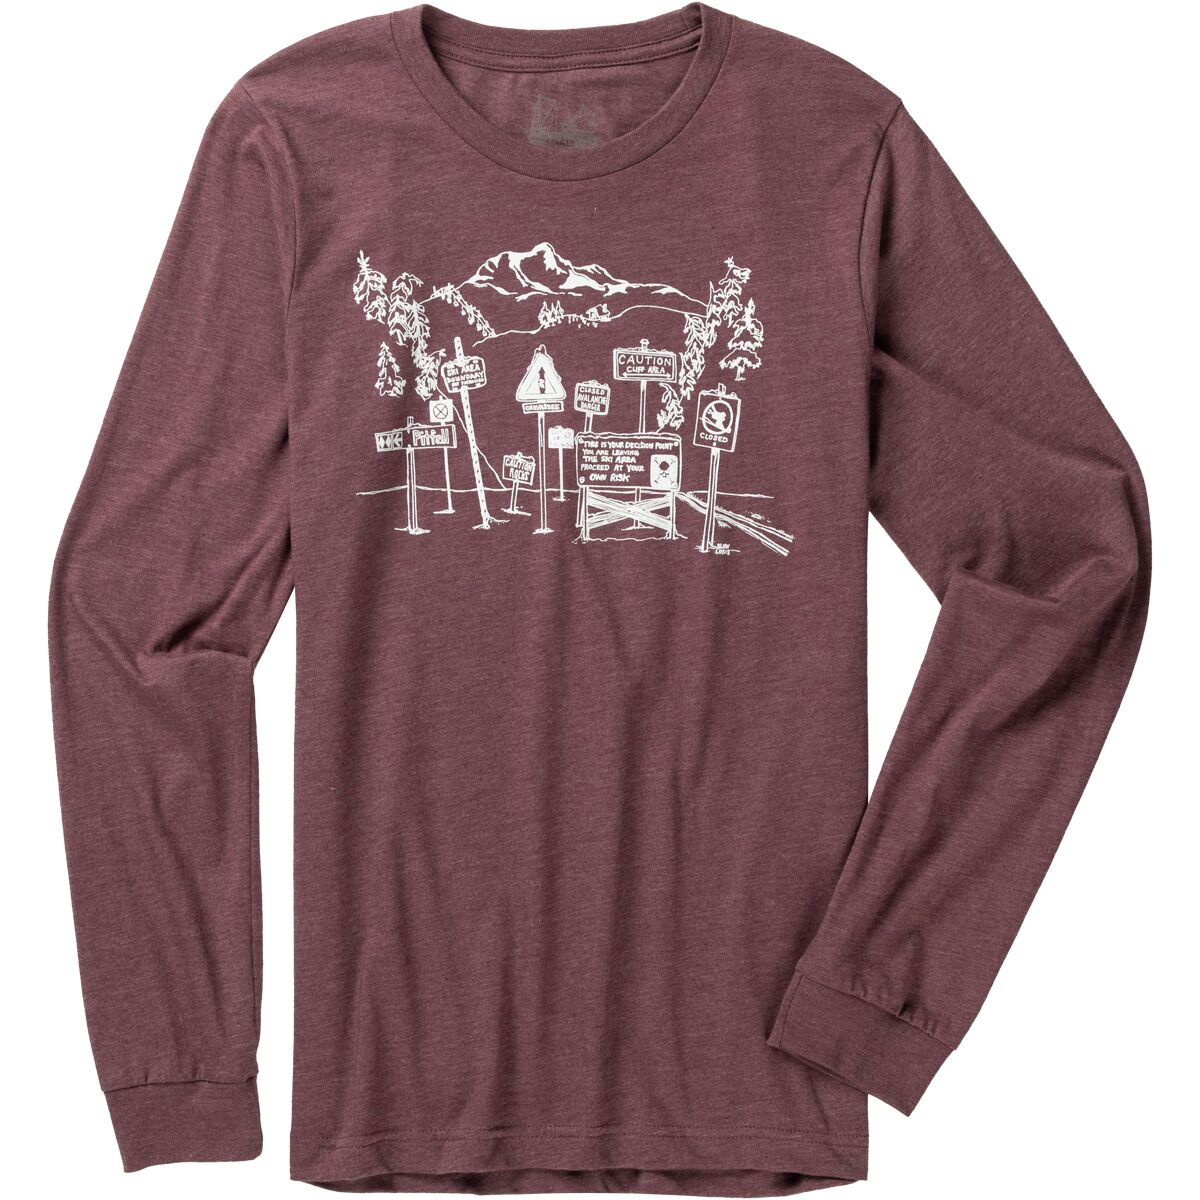 Slow Loris Backcountry Long-Sleeve T-Shirt - Men's